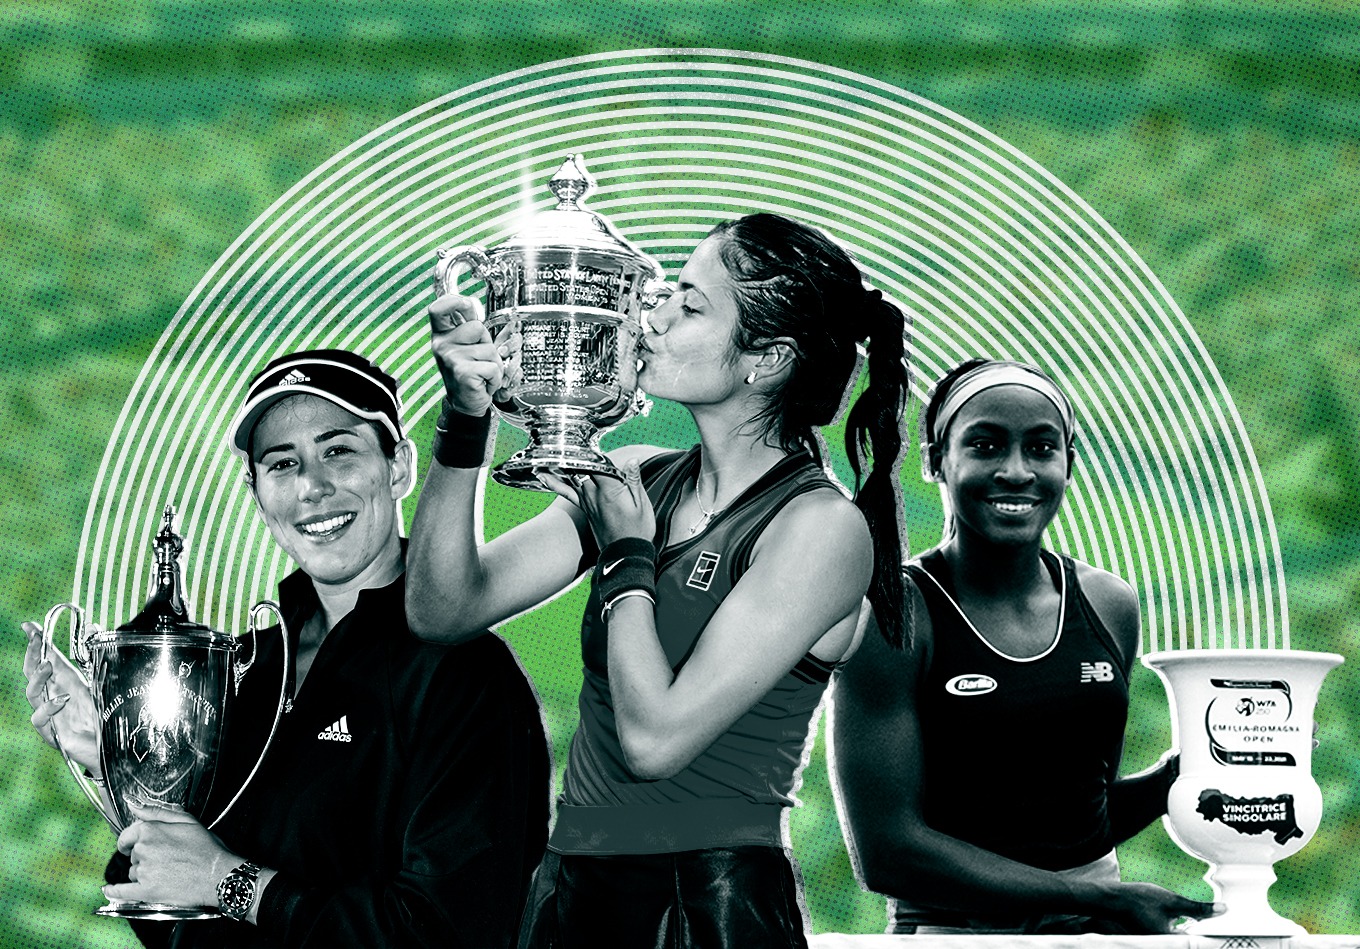 Raducanu, Gauff, Muguruza and more: The Biggest Stories From the WTA Tour in 2021